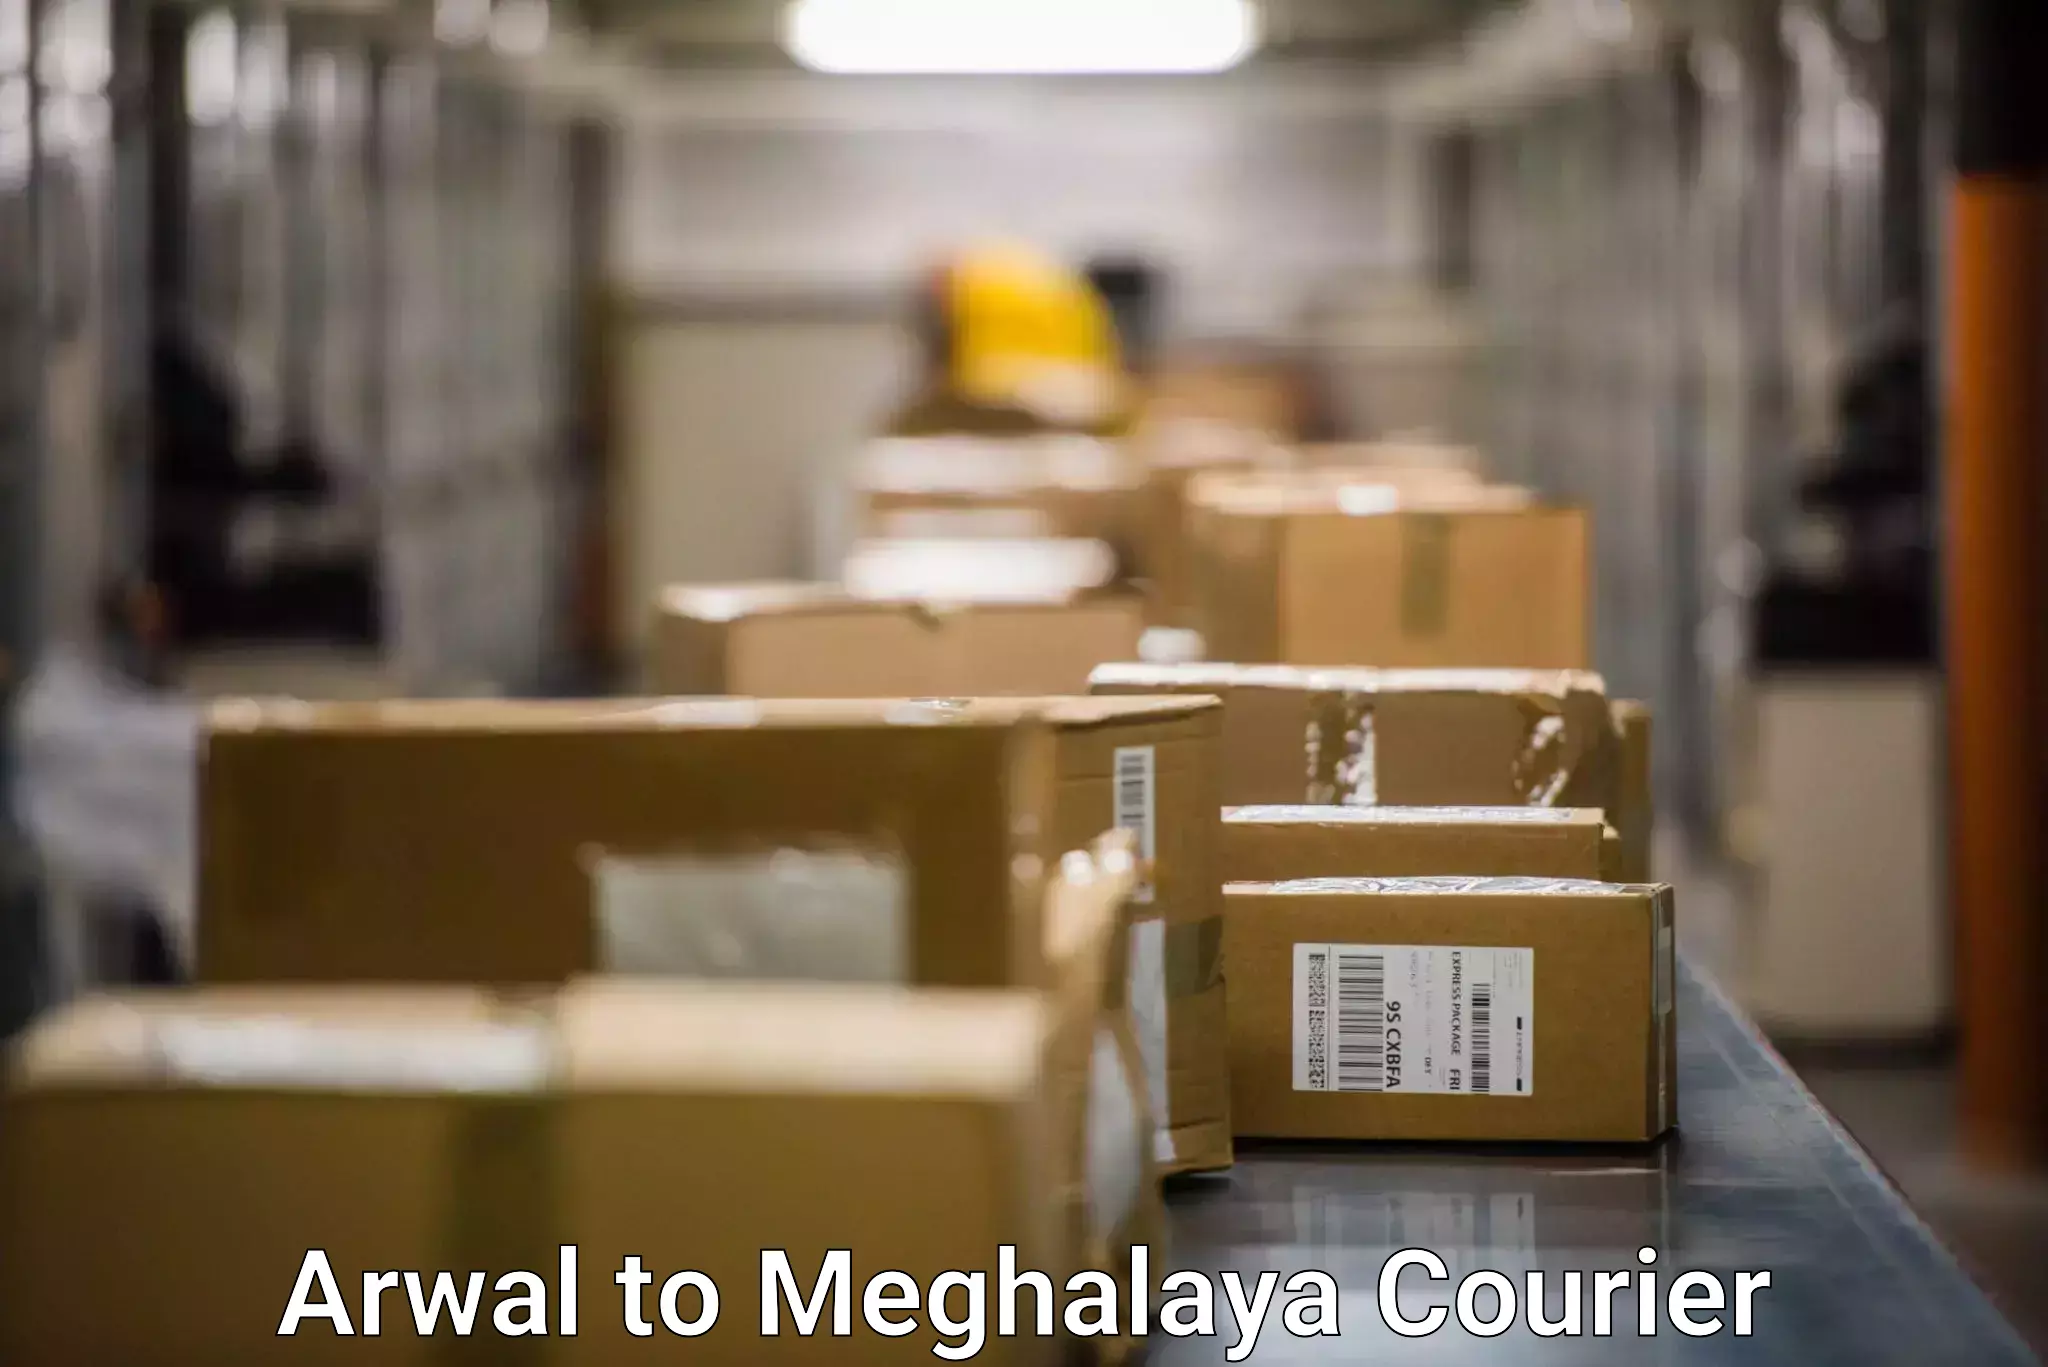 Efficient order fulfillment Arwal to Meghalaya